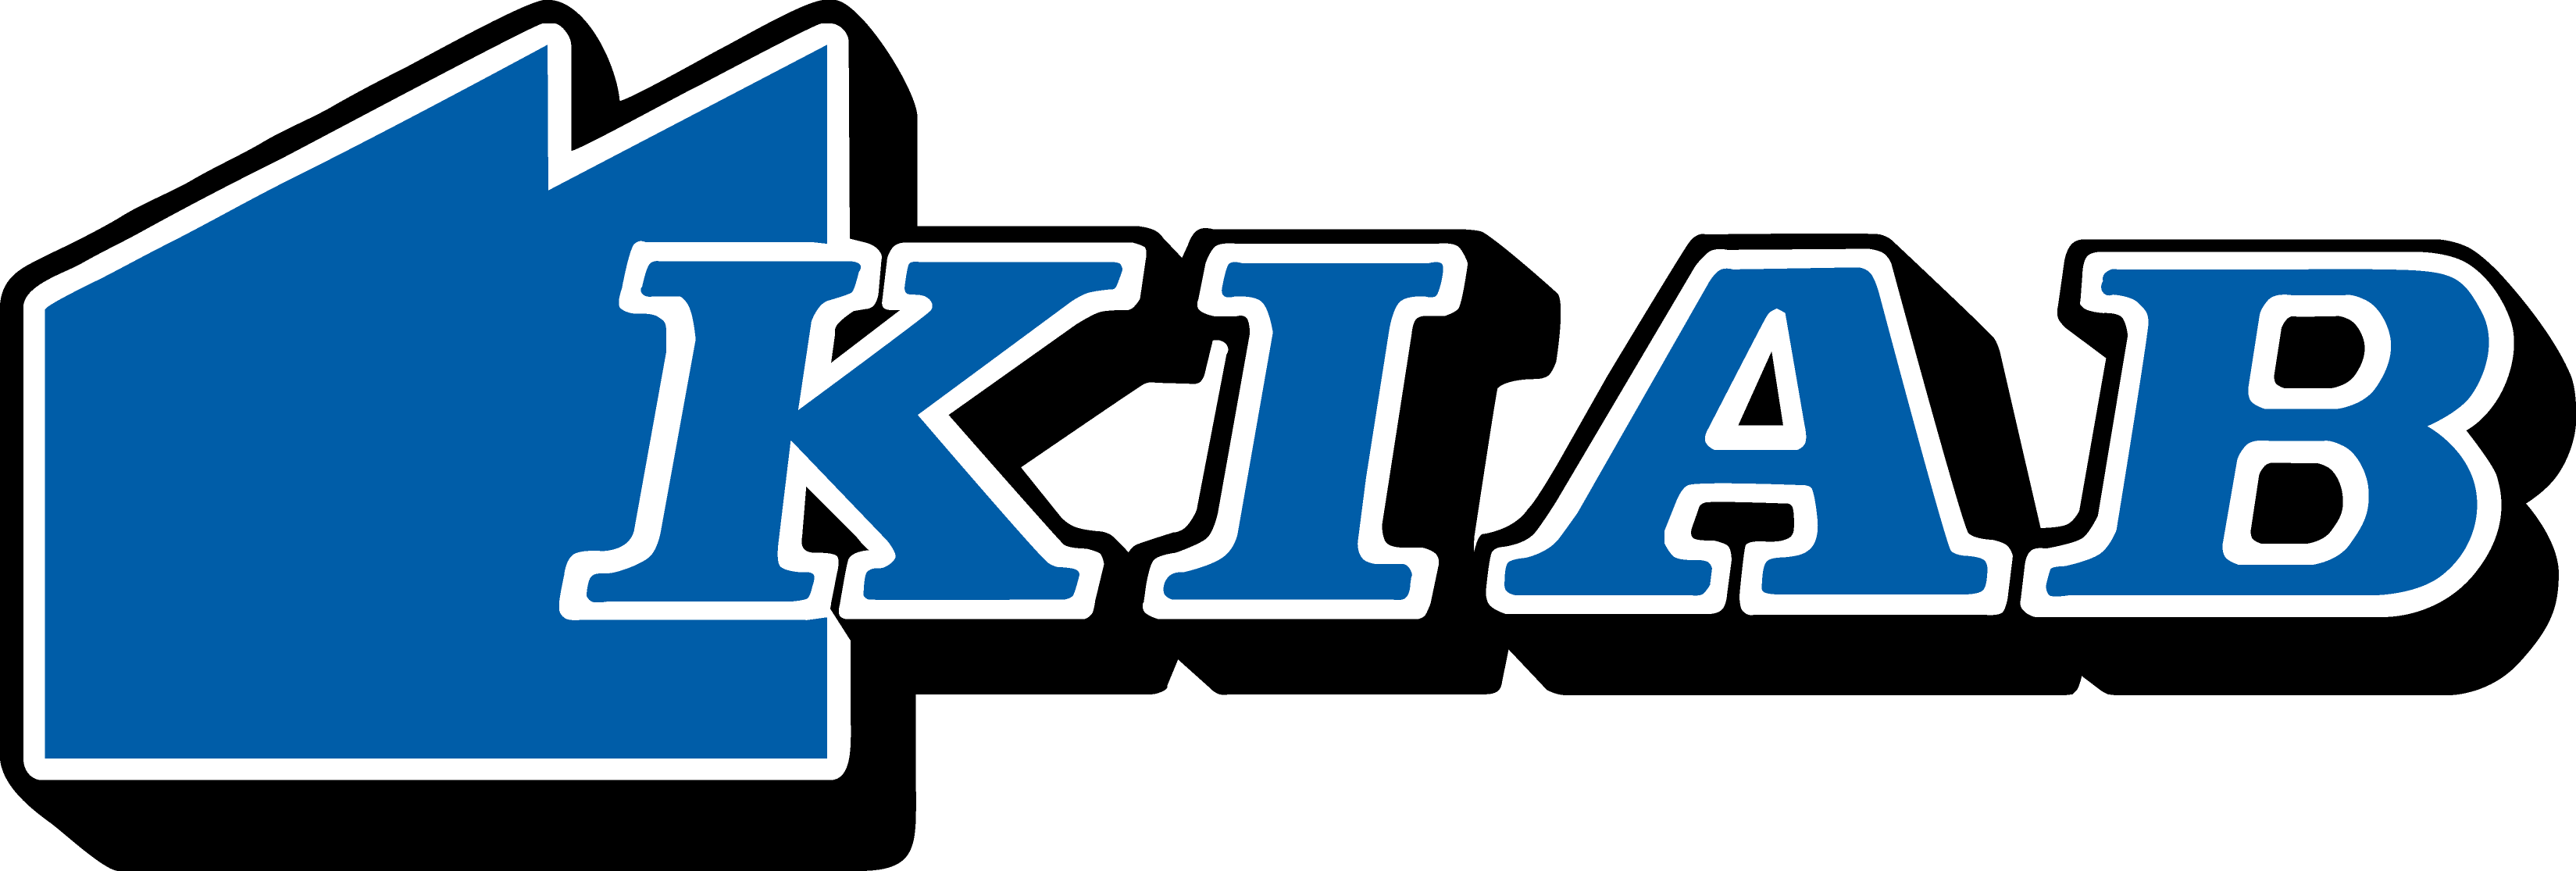 KIABs logotyp i blått